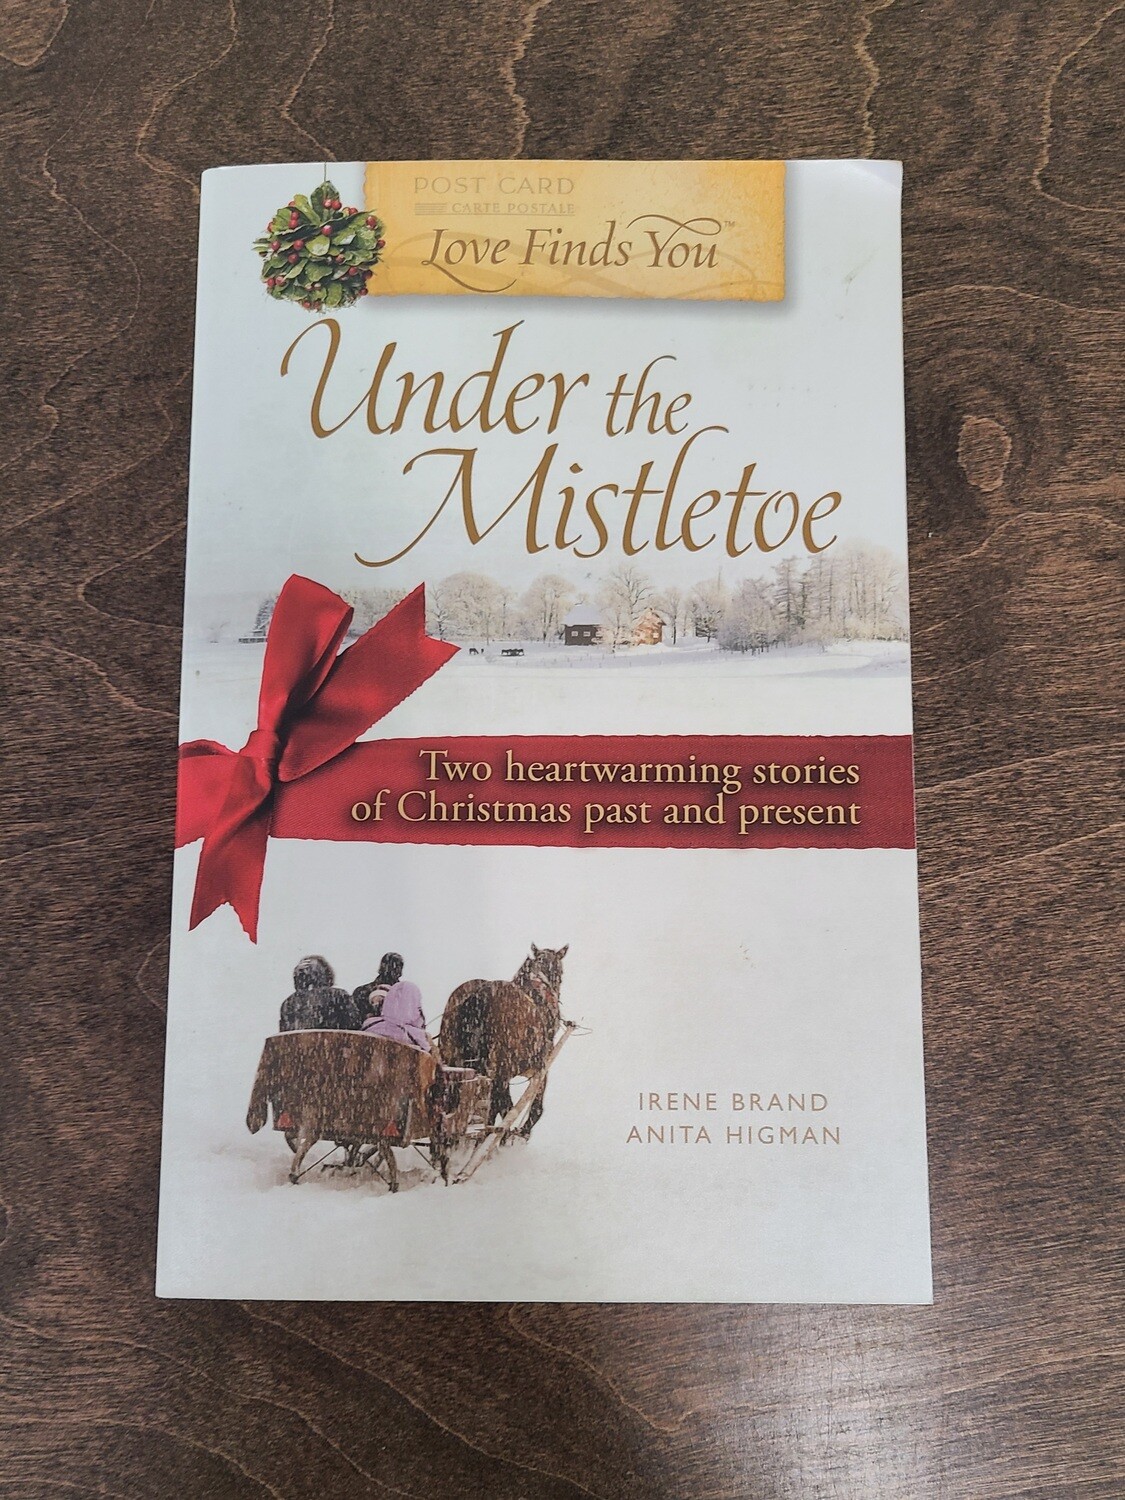 Under the Mistletoe by Irene Brand and Anita Higman